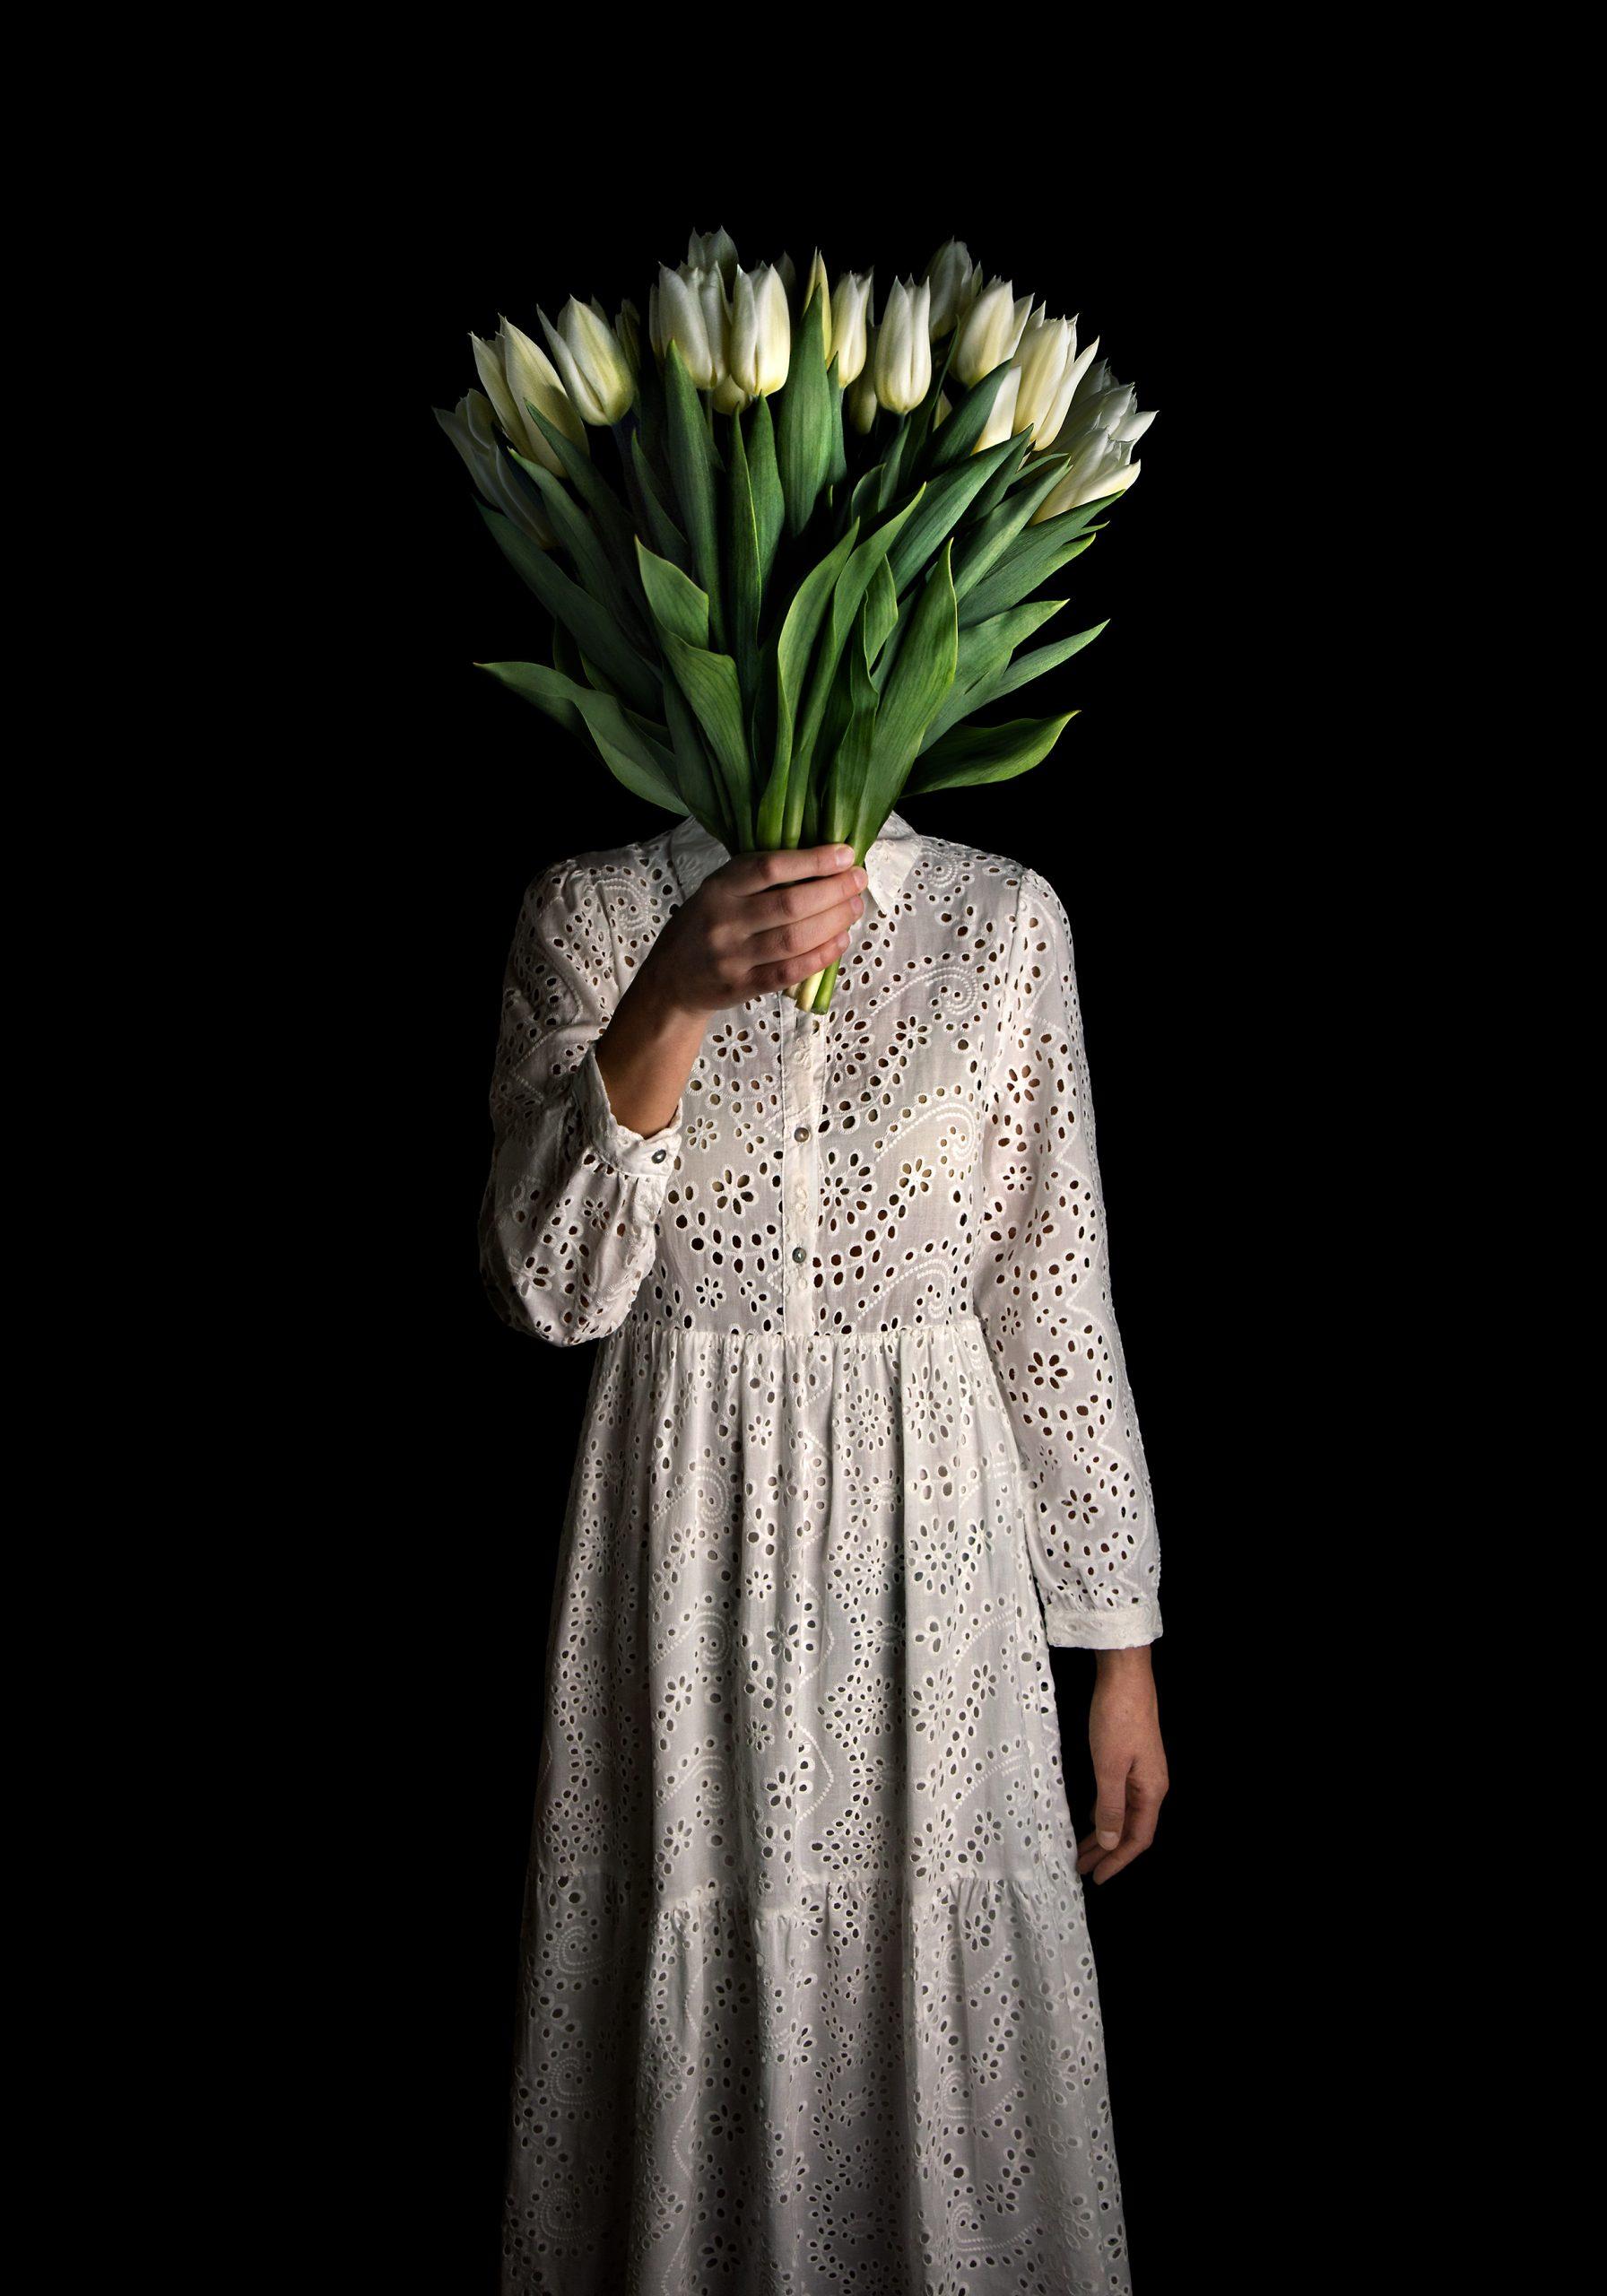 Tulipanes Blancos - Photograph by Miguel Vallinas